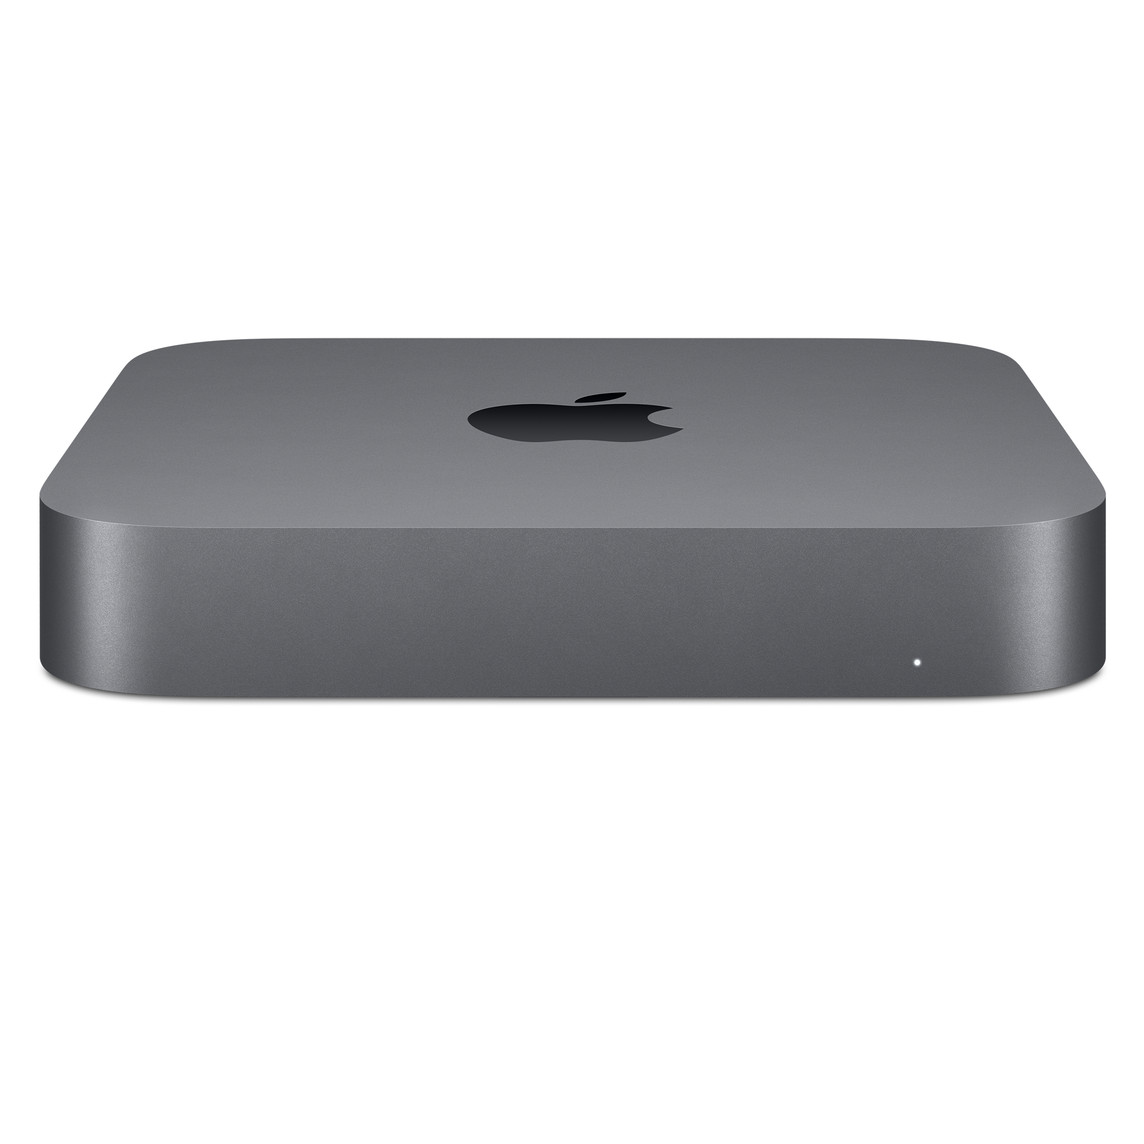 Mac mini 的正面，展示上方的 Apple 標誌。